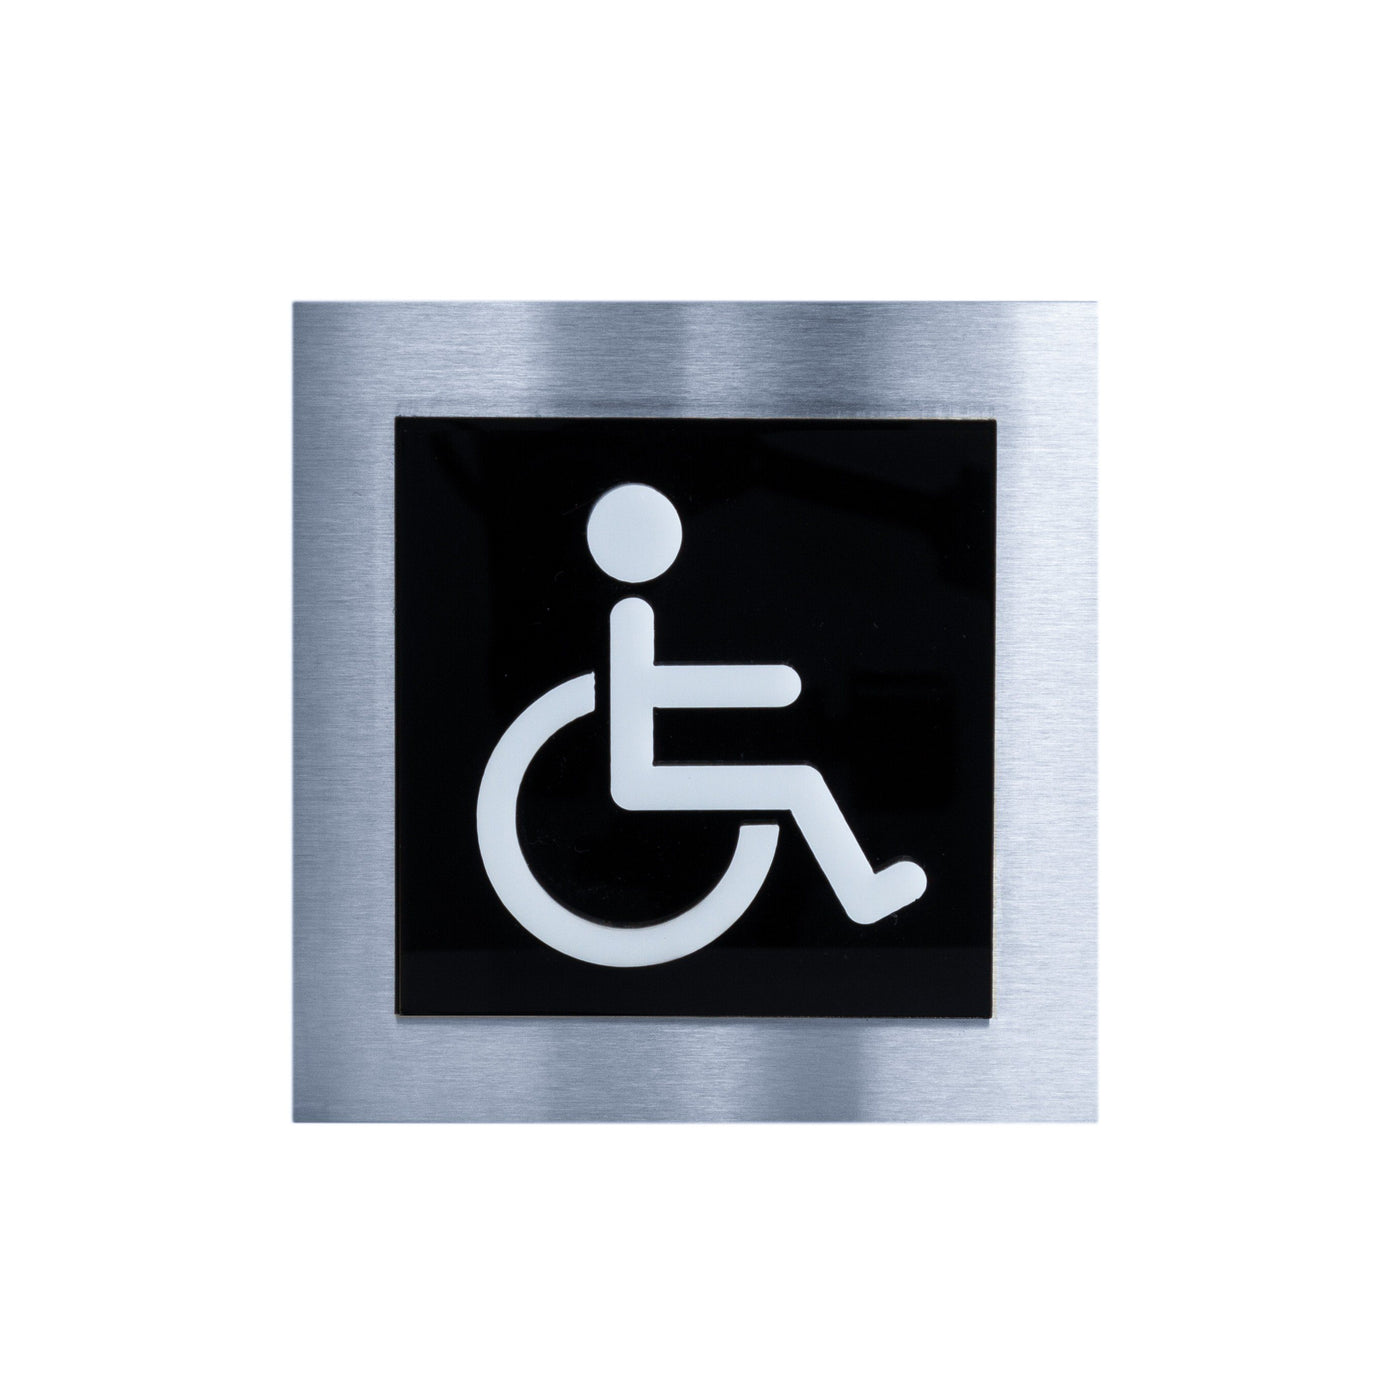 Steel Wheelchair Toilet Bathroom Sign Bathroom Signs black / white pictogram Bsign